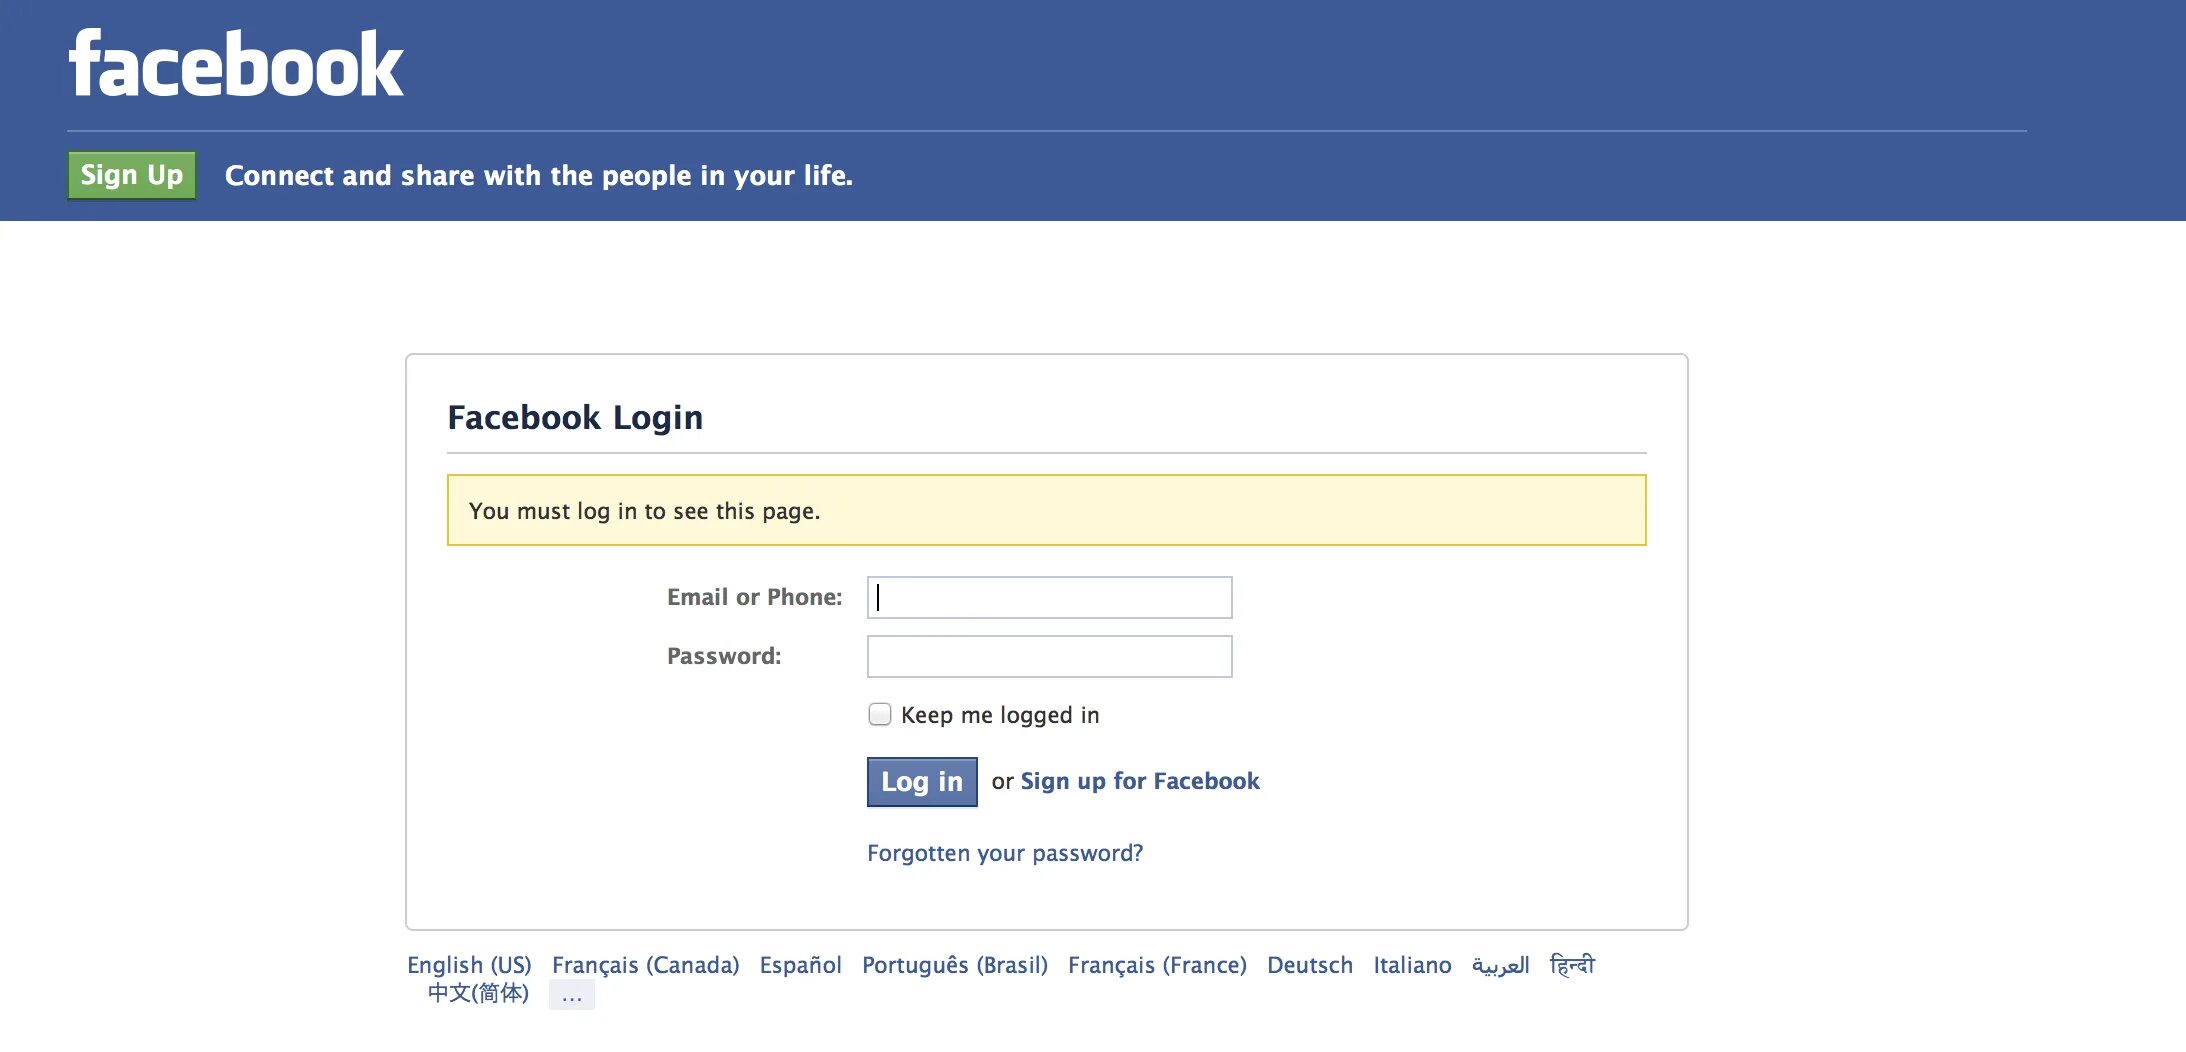 Www.Facebook.com login. Facebook account. Facebook.com Facebook.com. Facebook вход. Login user id